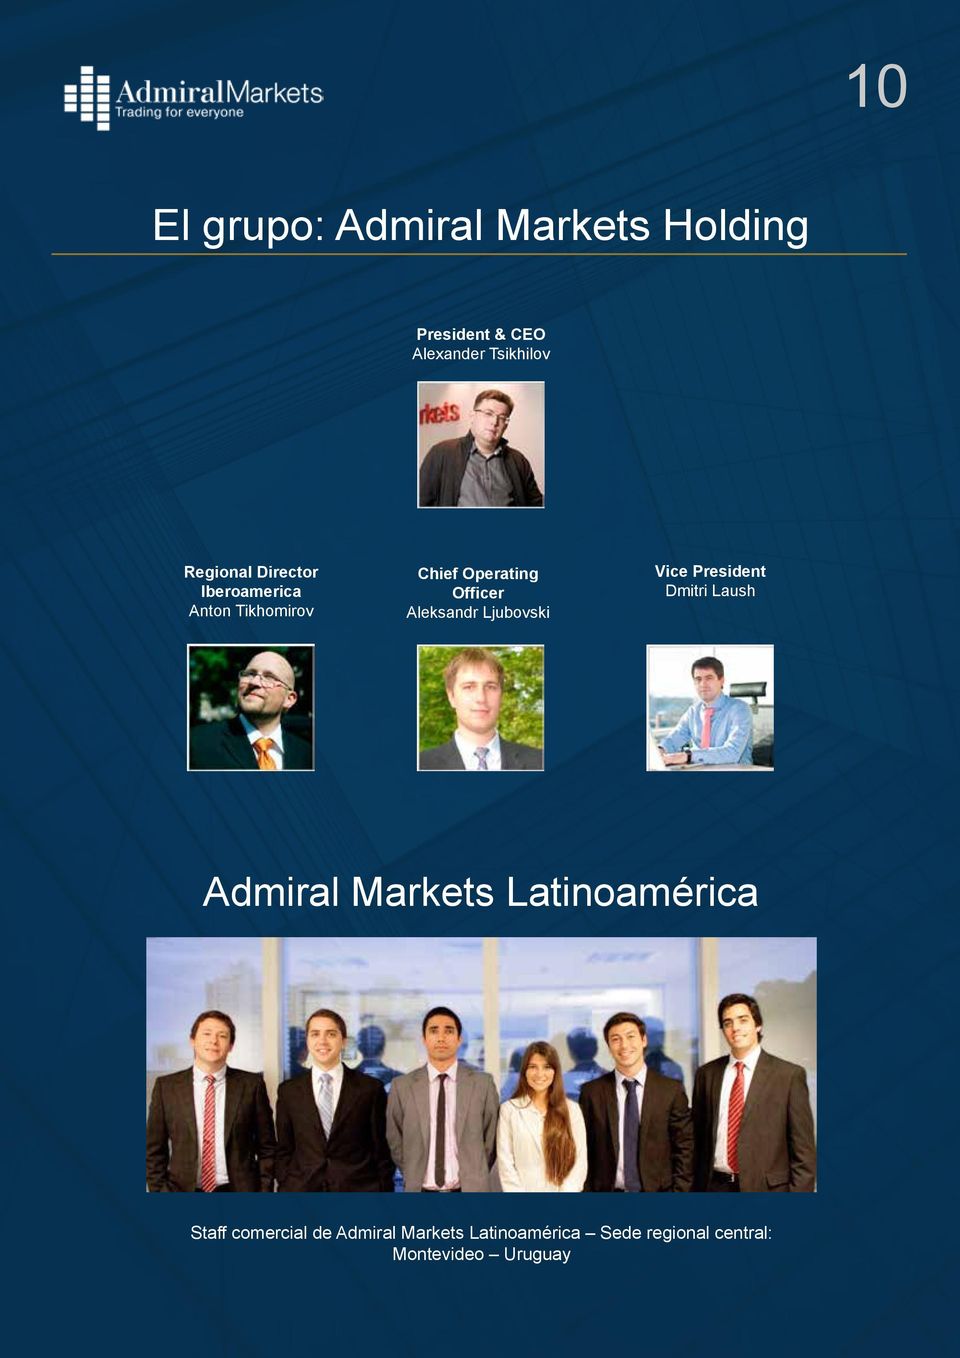 Aleksandr Ljubovski Vice President Dmitri Laush Admiral Markets Latinoamérica